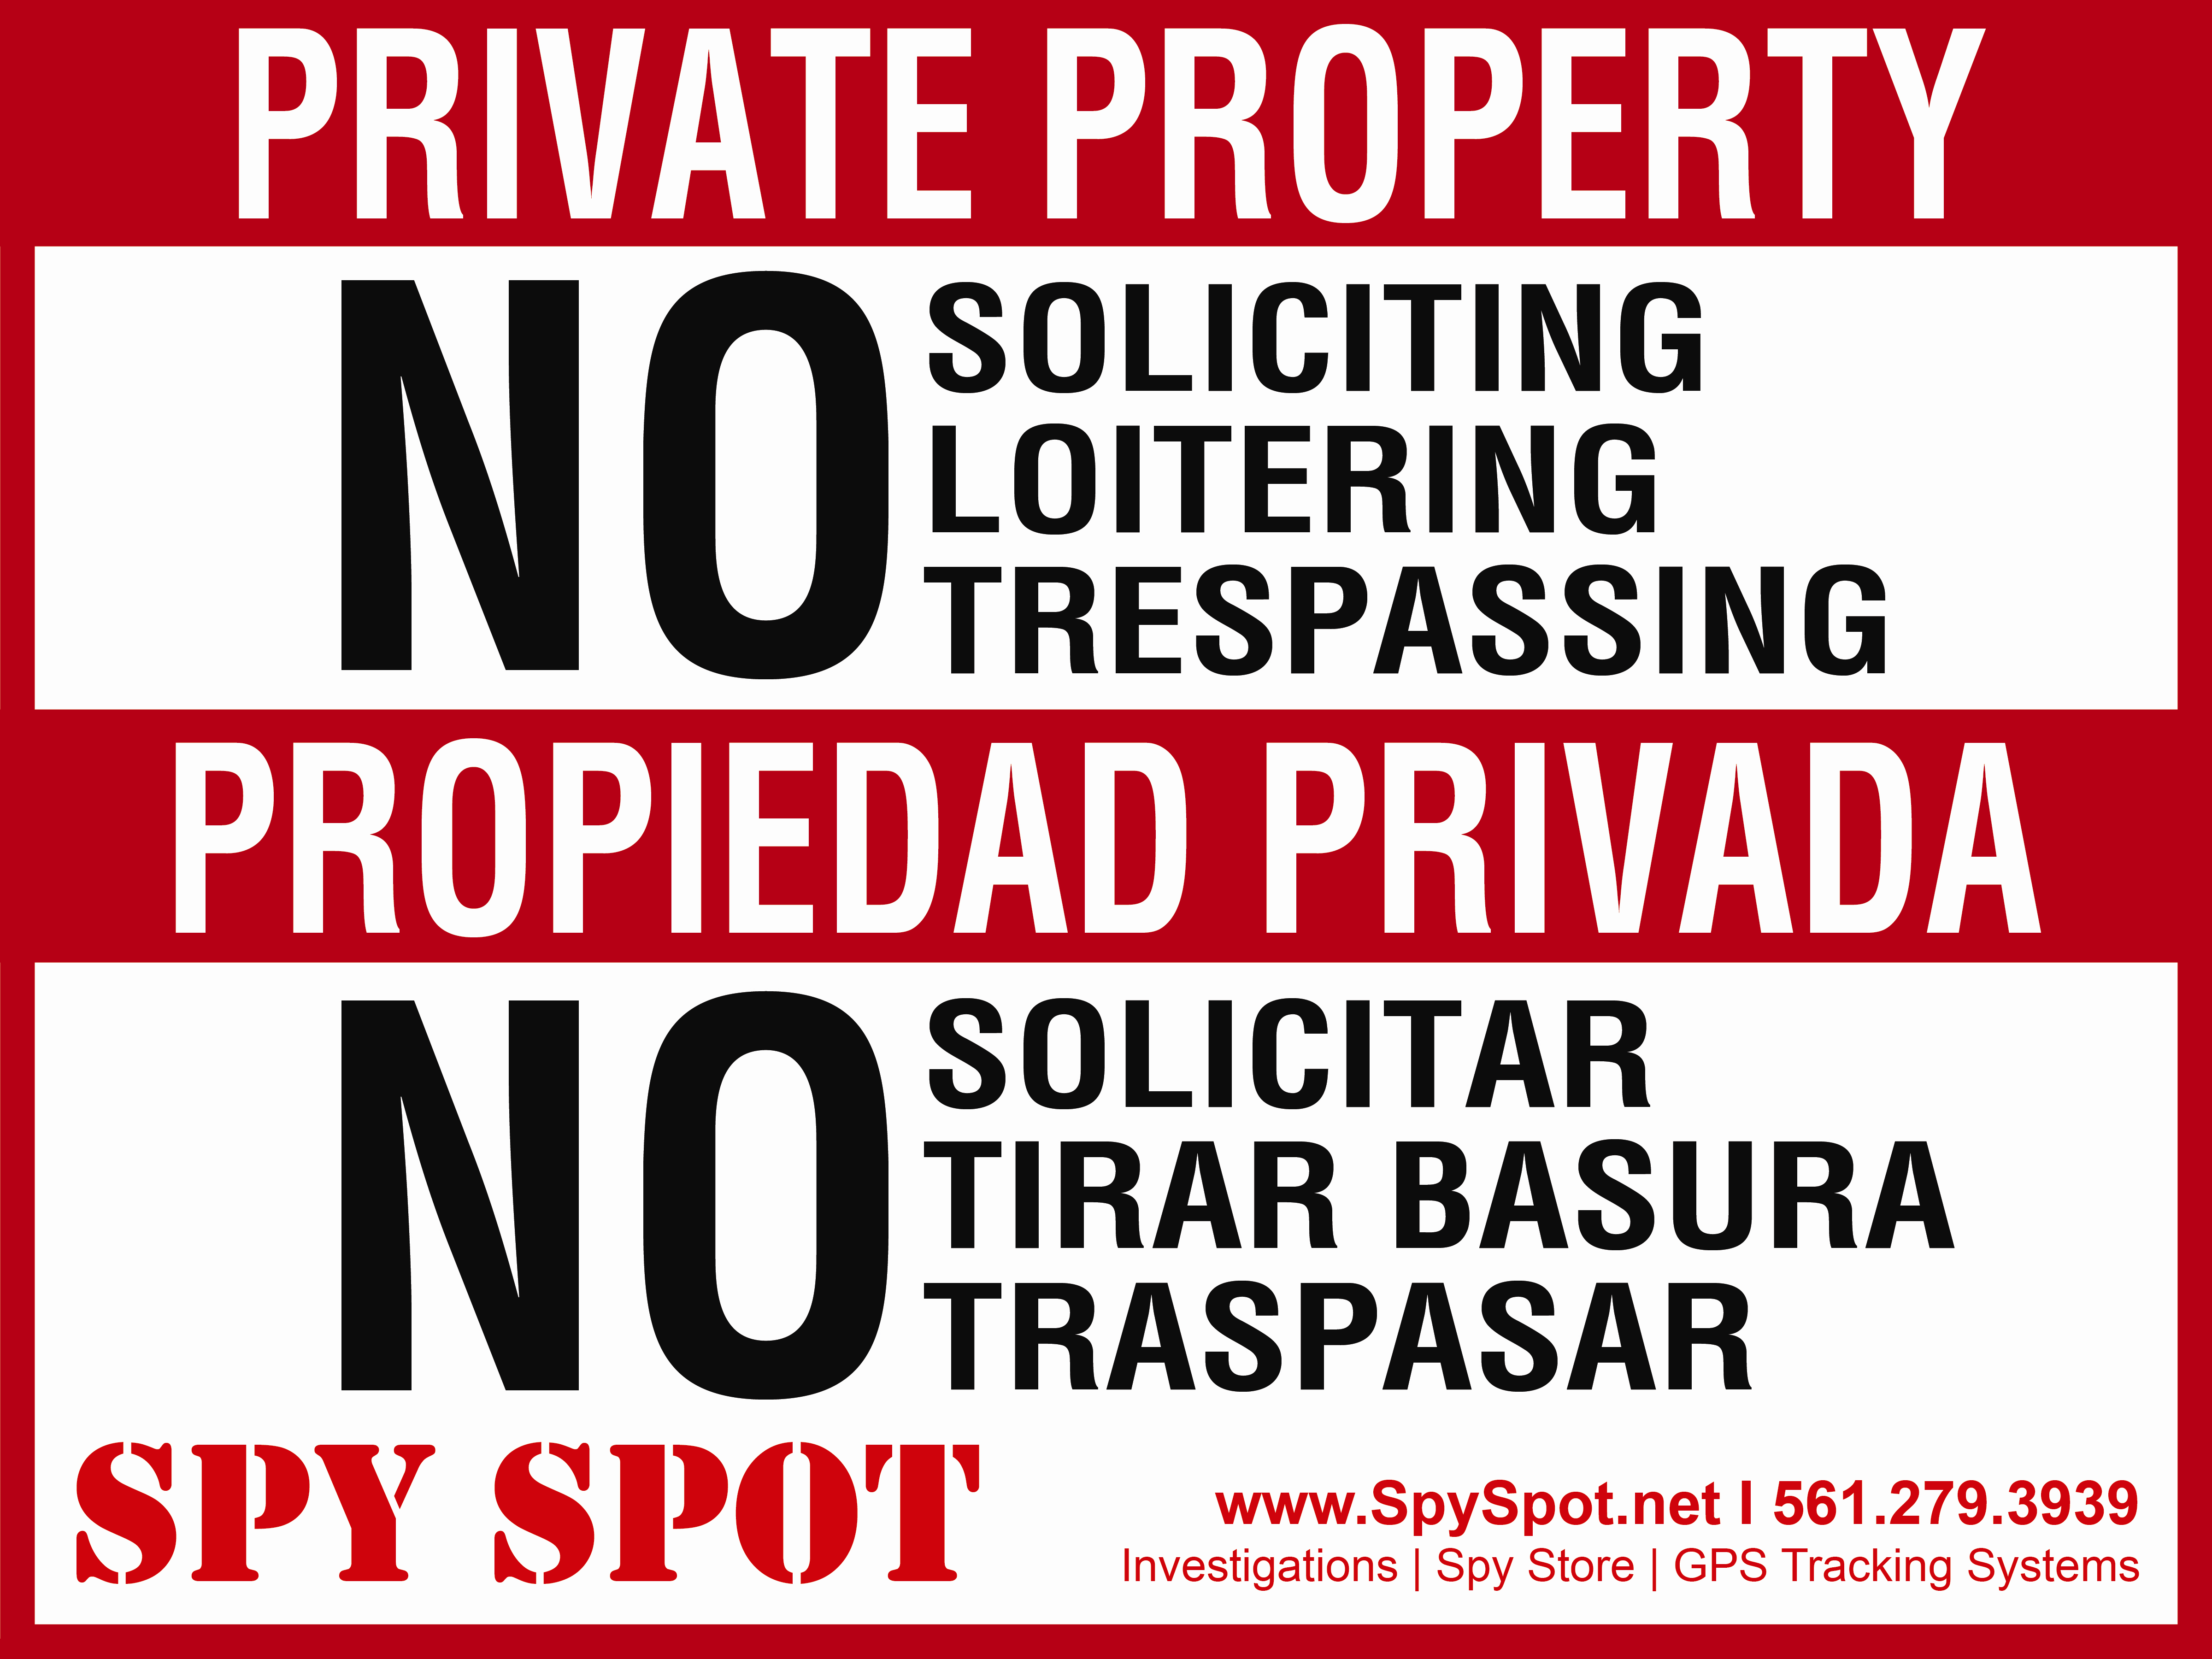 Private Property No Trespassing Plastic Sign - Spy Spot